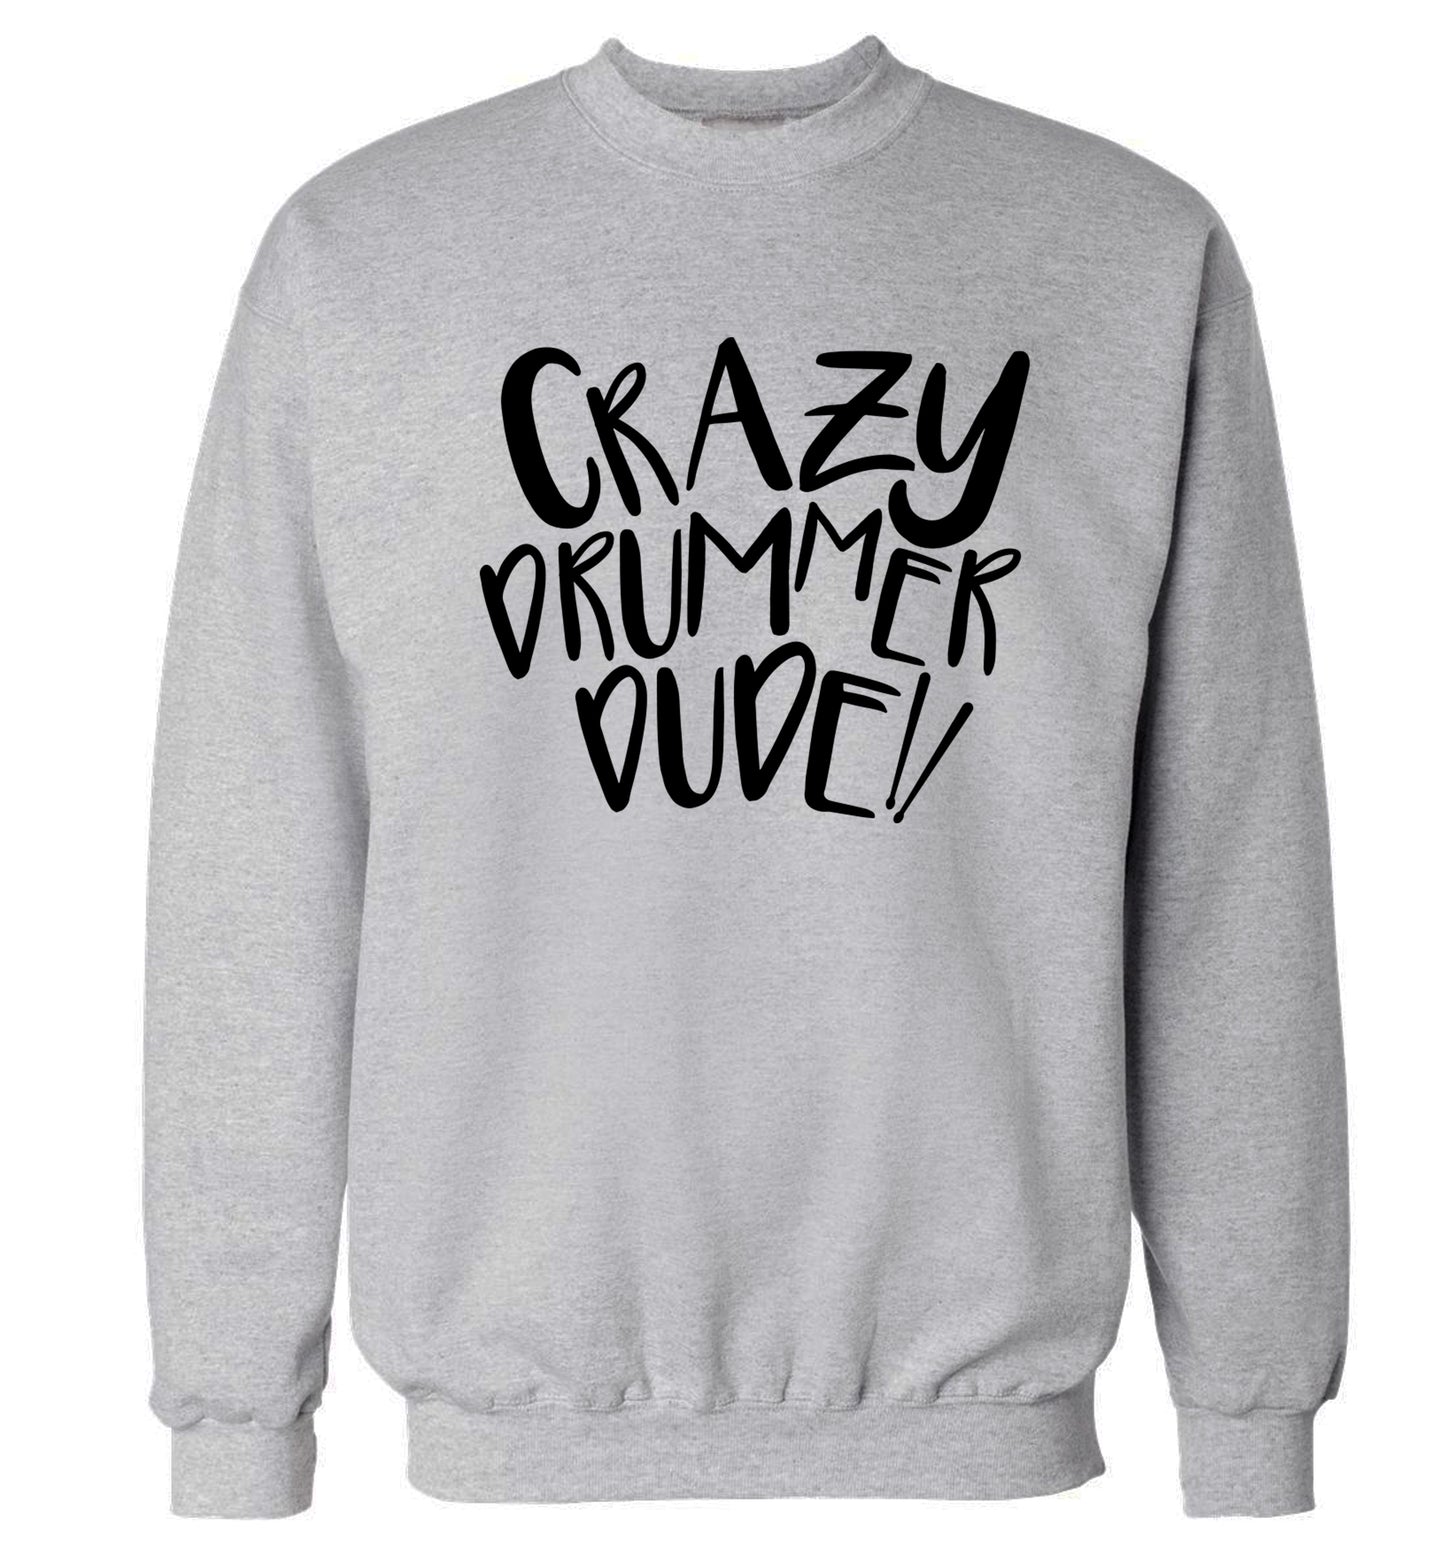 Crazy drummer dude Adult's unisex grey Sweater 2XL